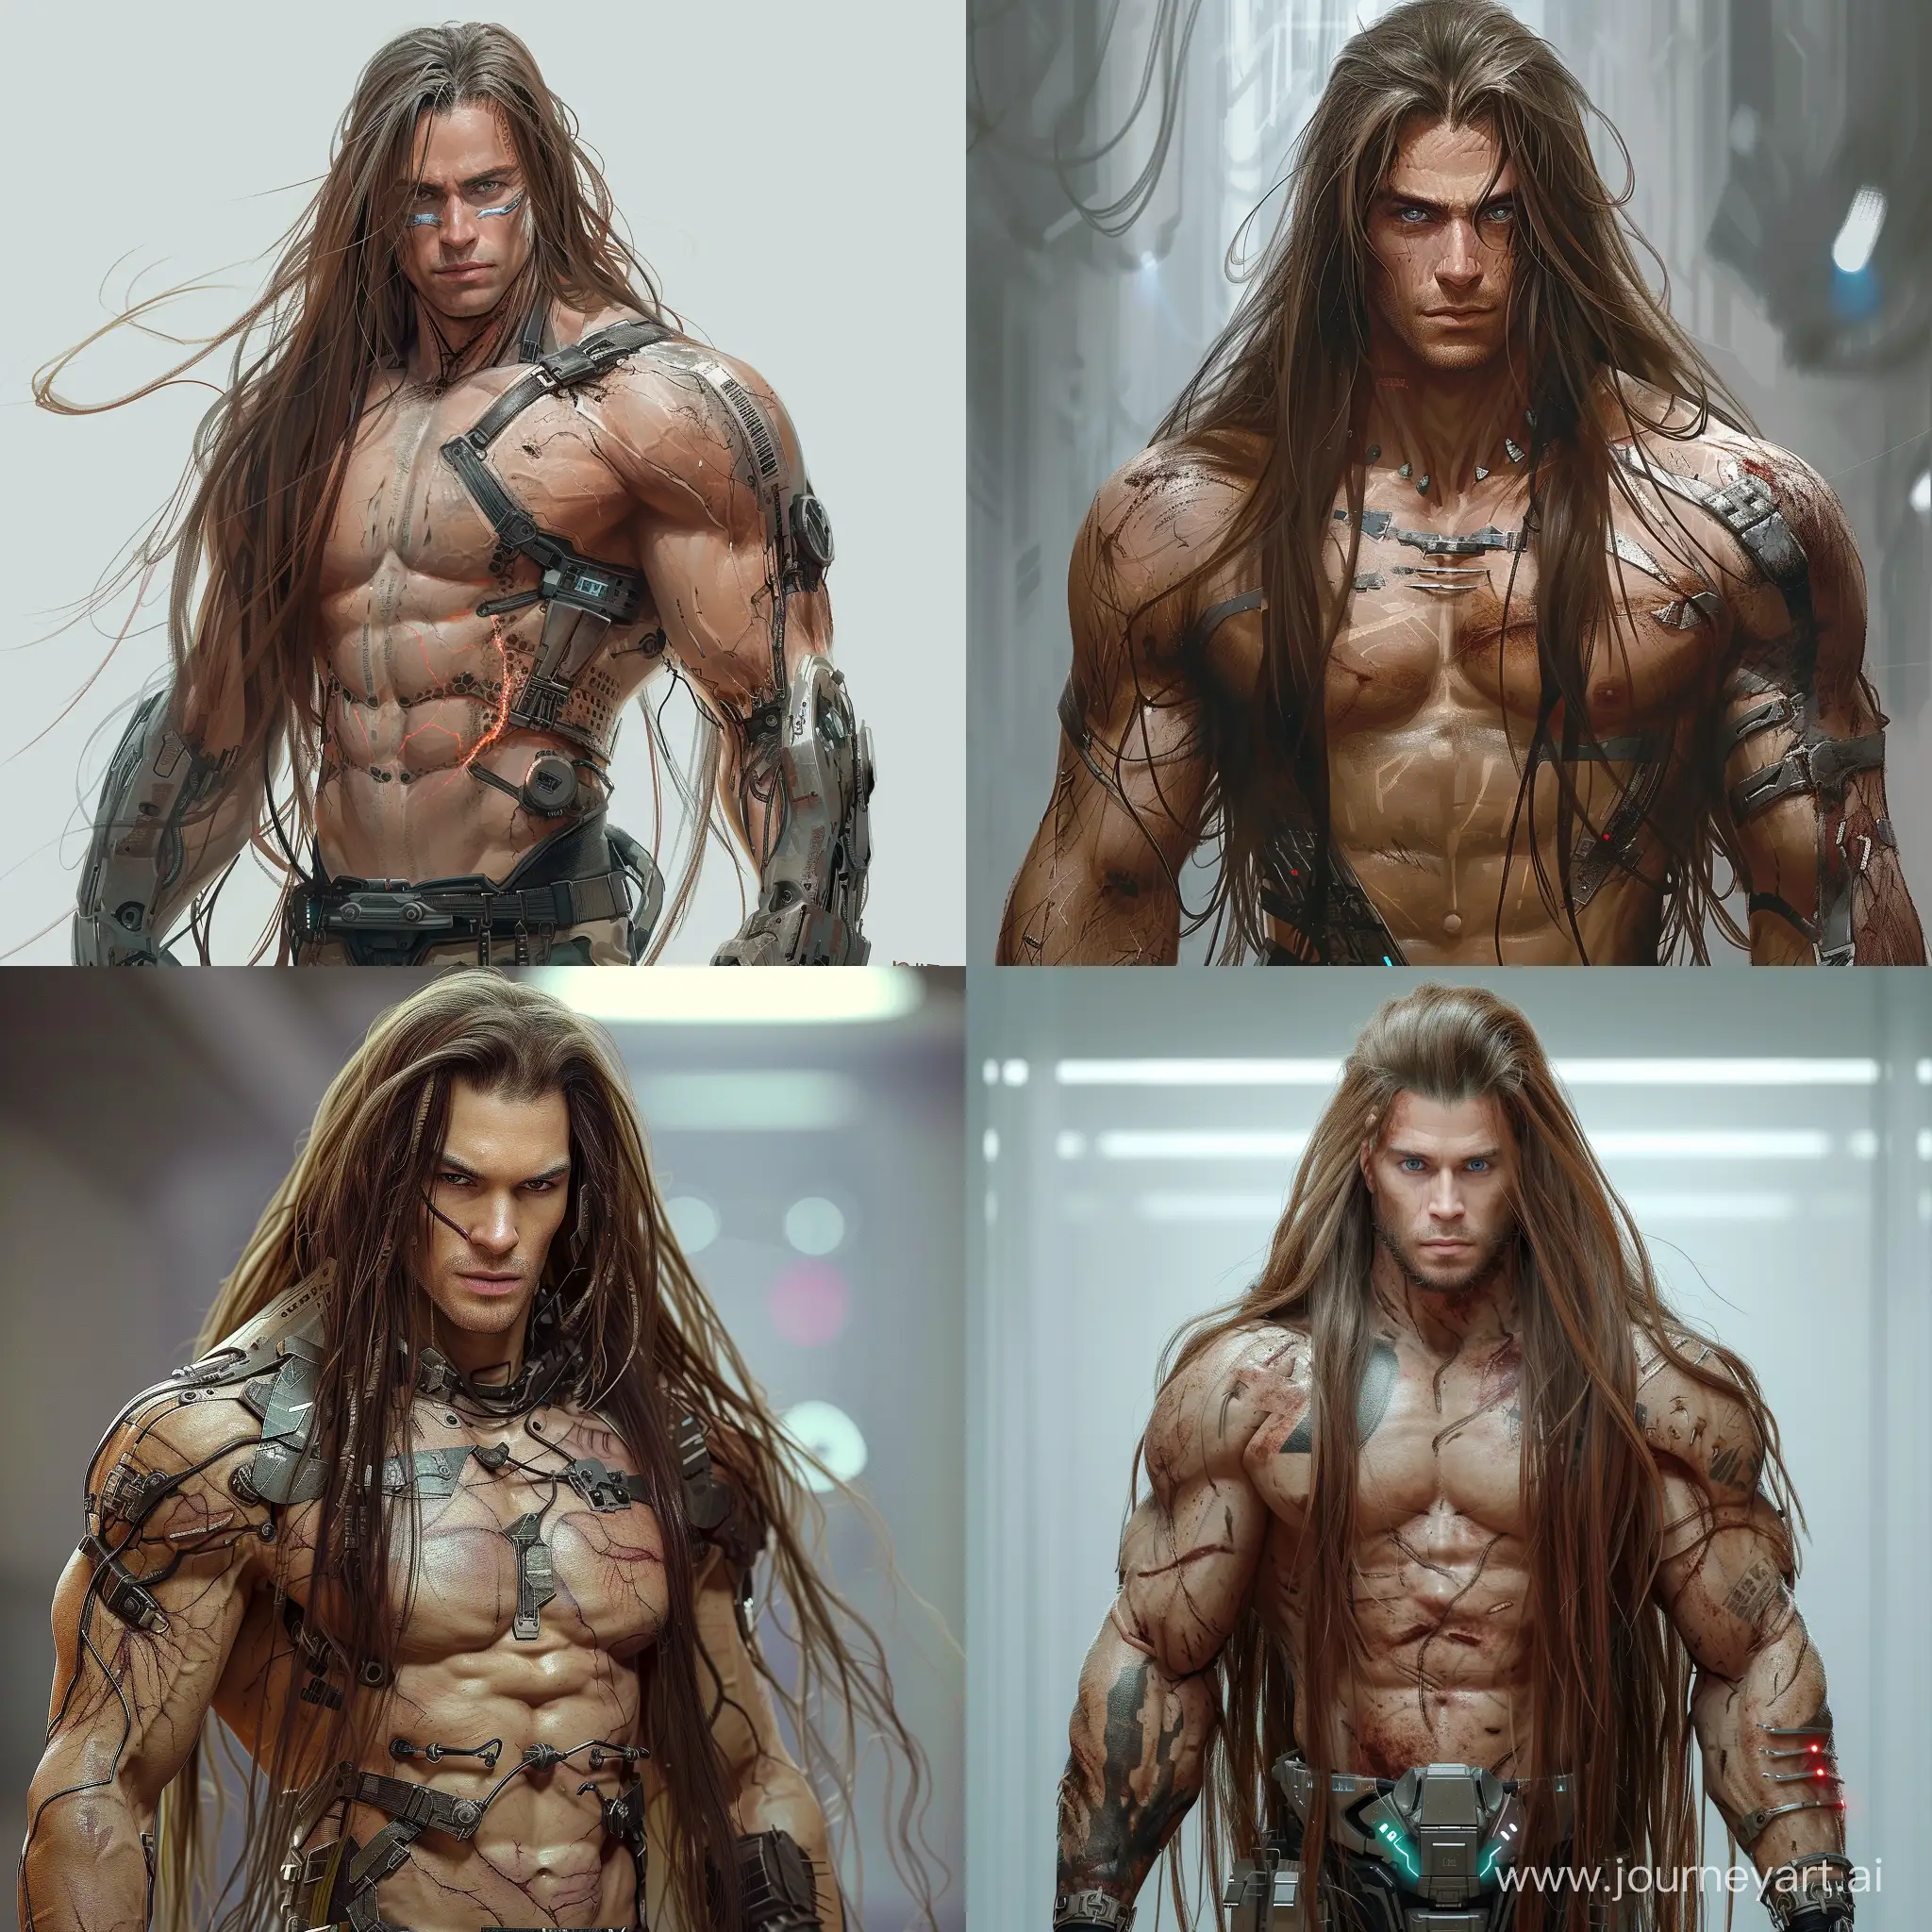 Cyberpunk-Warrior-with-Scars-Muscular-Man-in-Futuristic-Attire